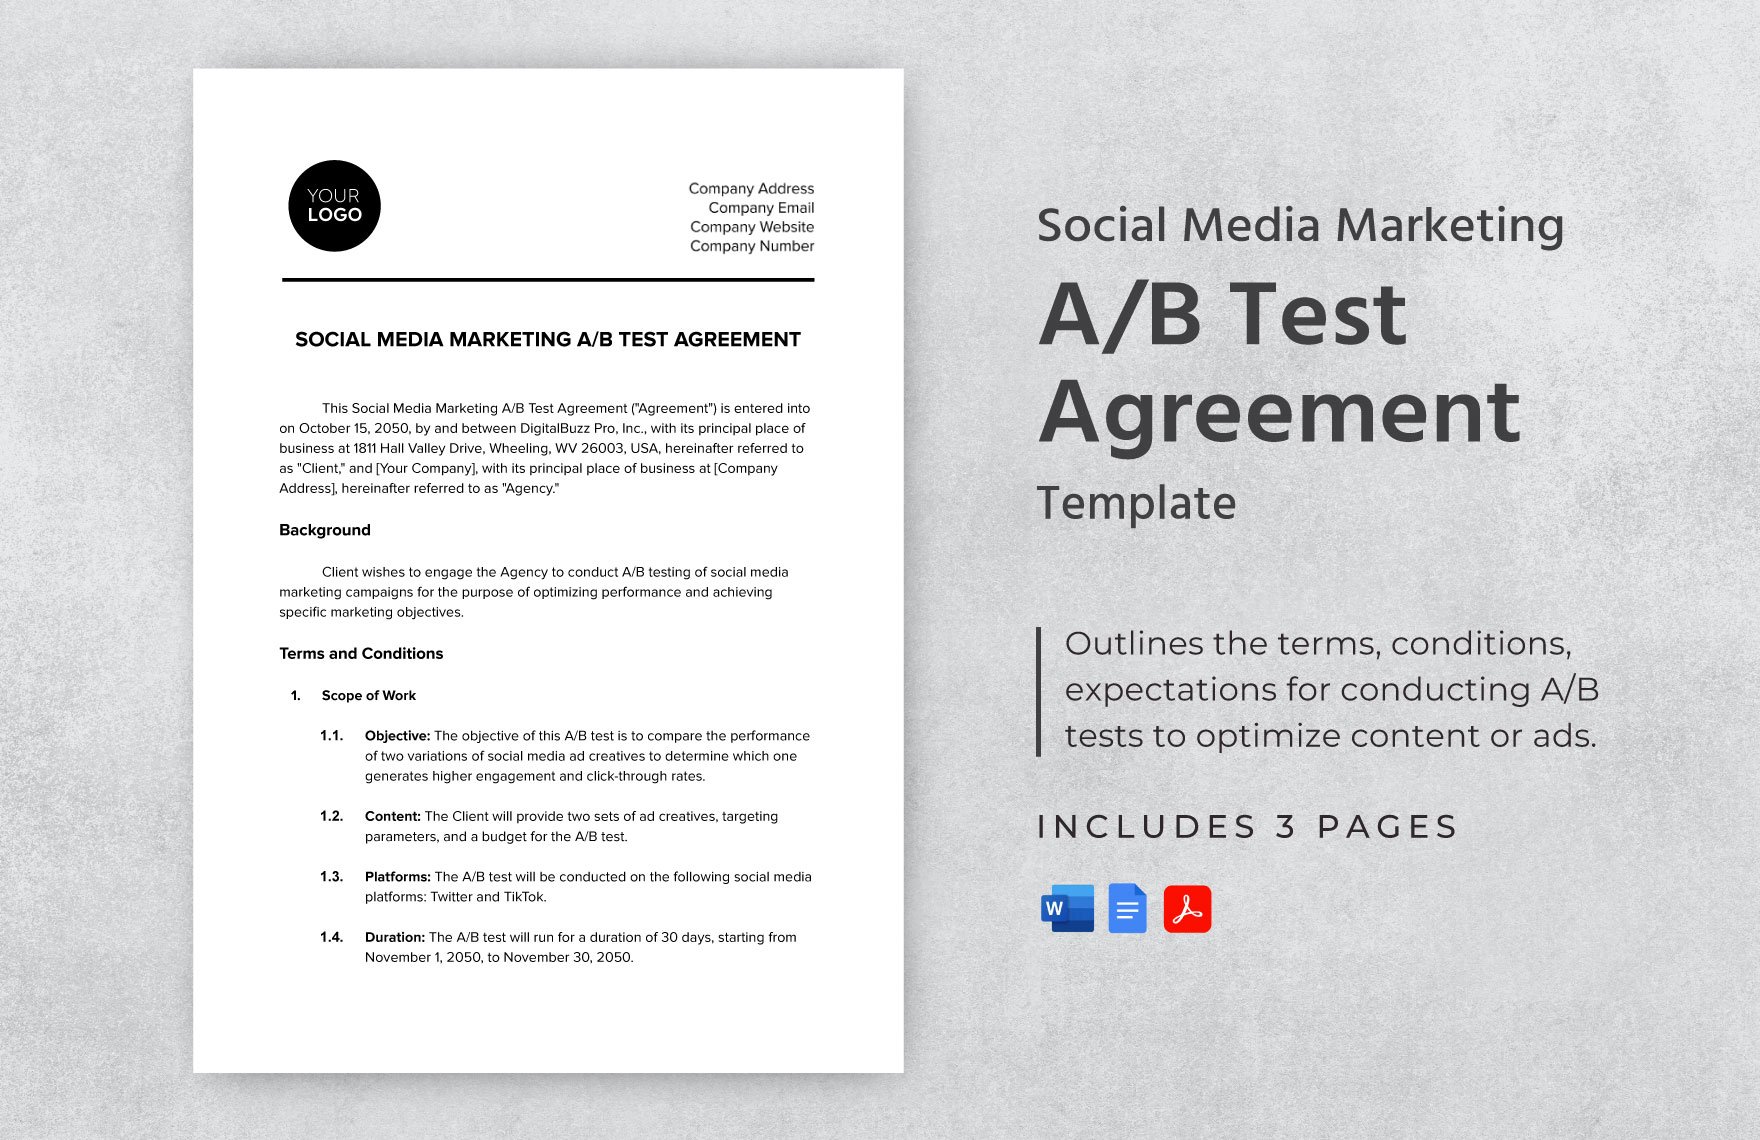 Social Media Marketing A/B Test Agreement Template in Word, Google Docs, PDF